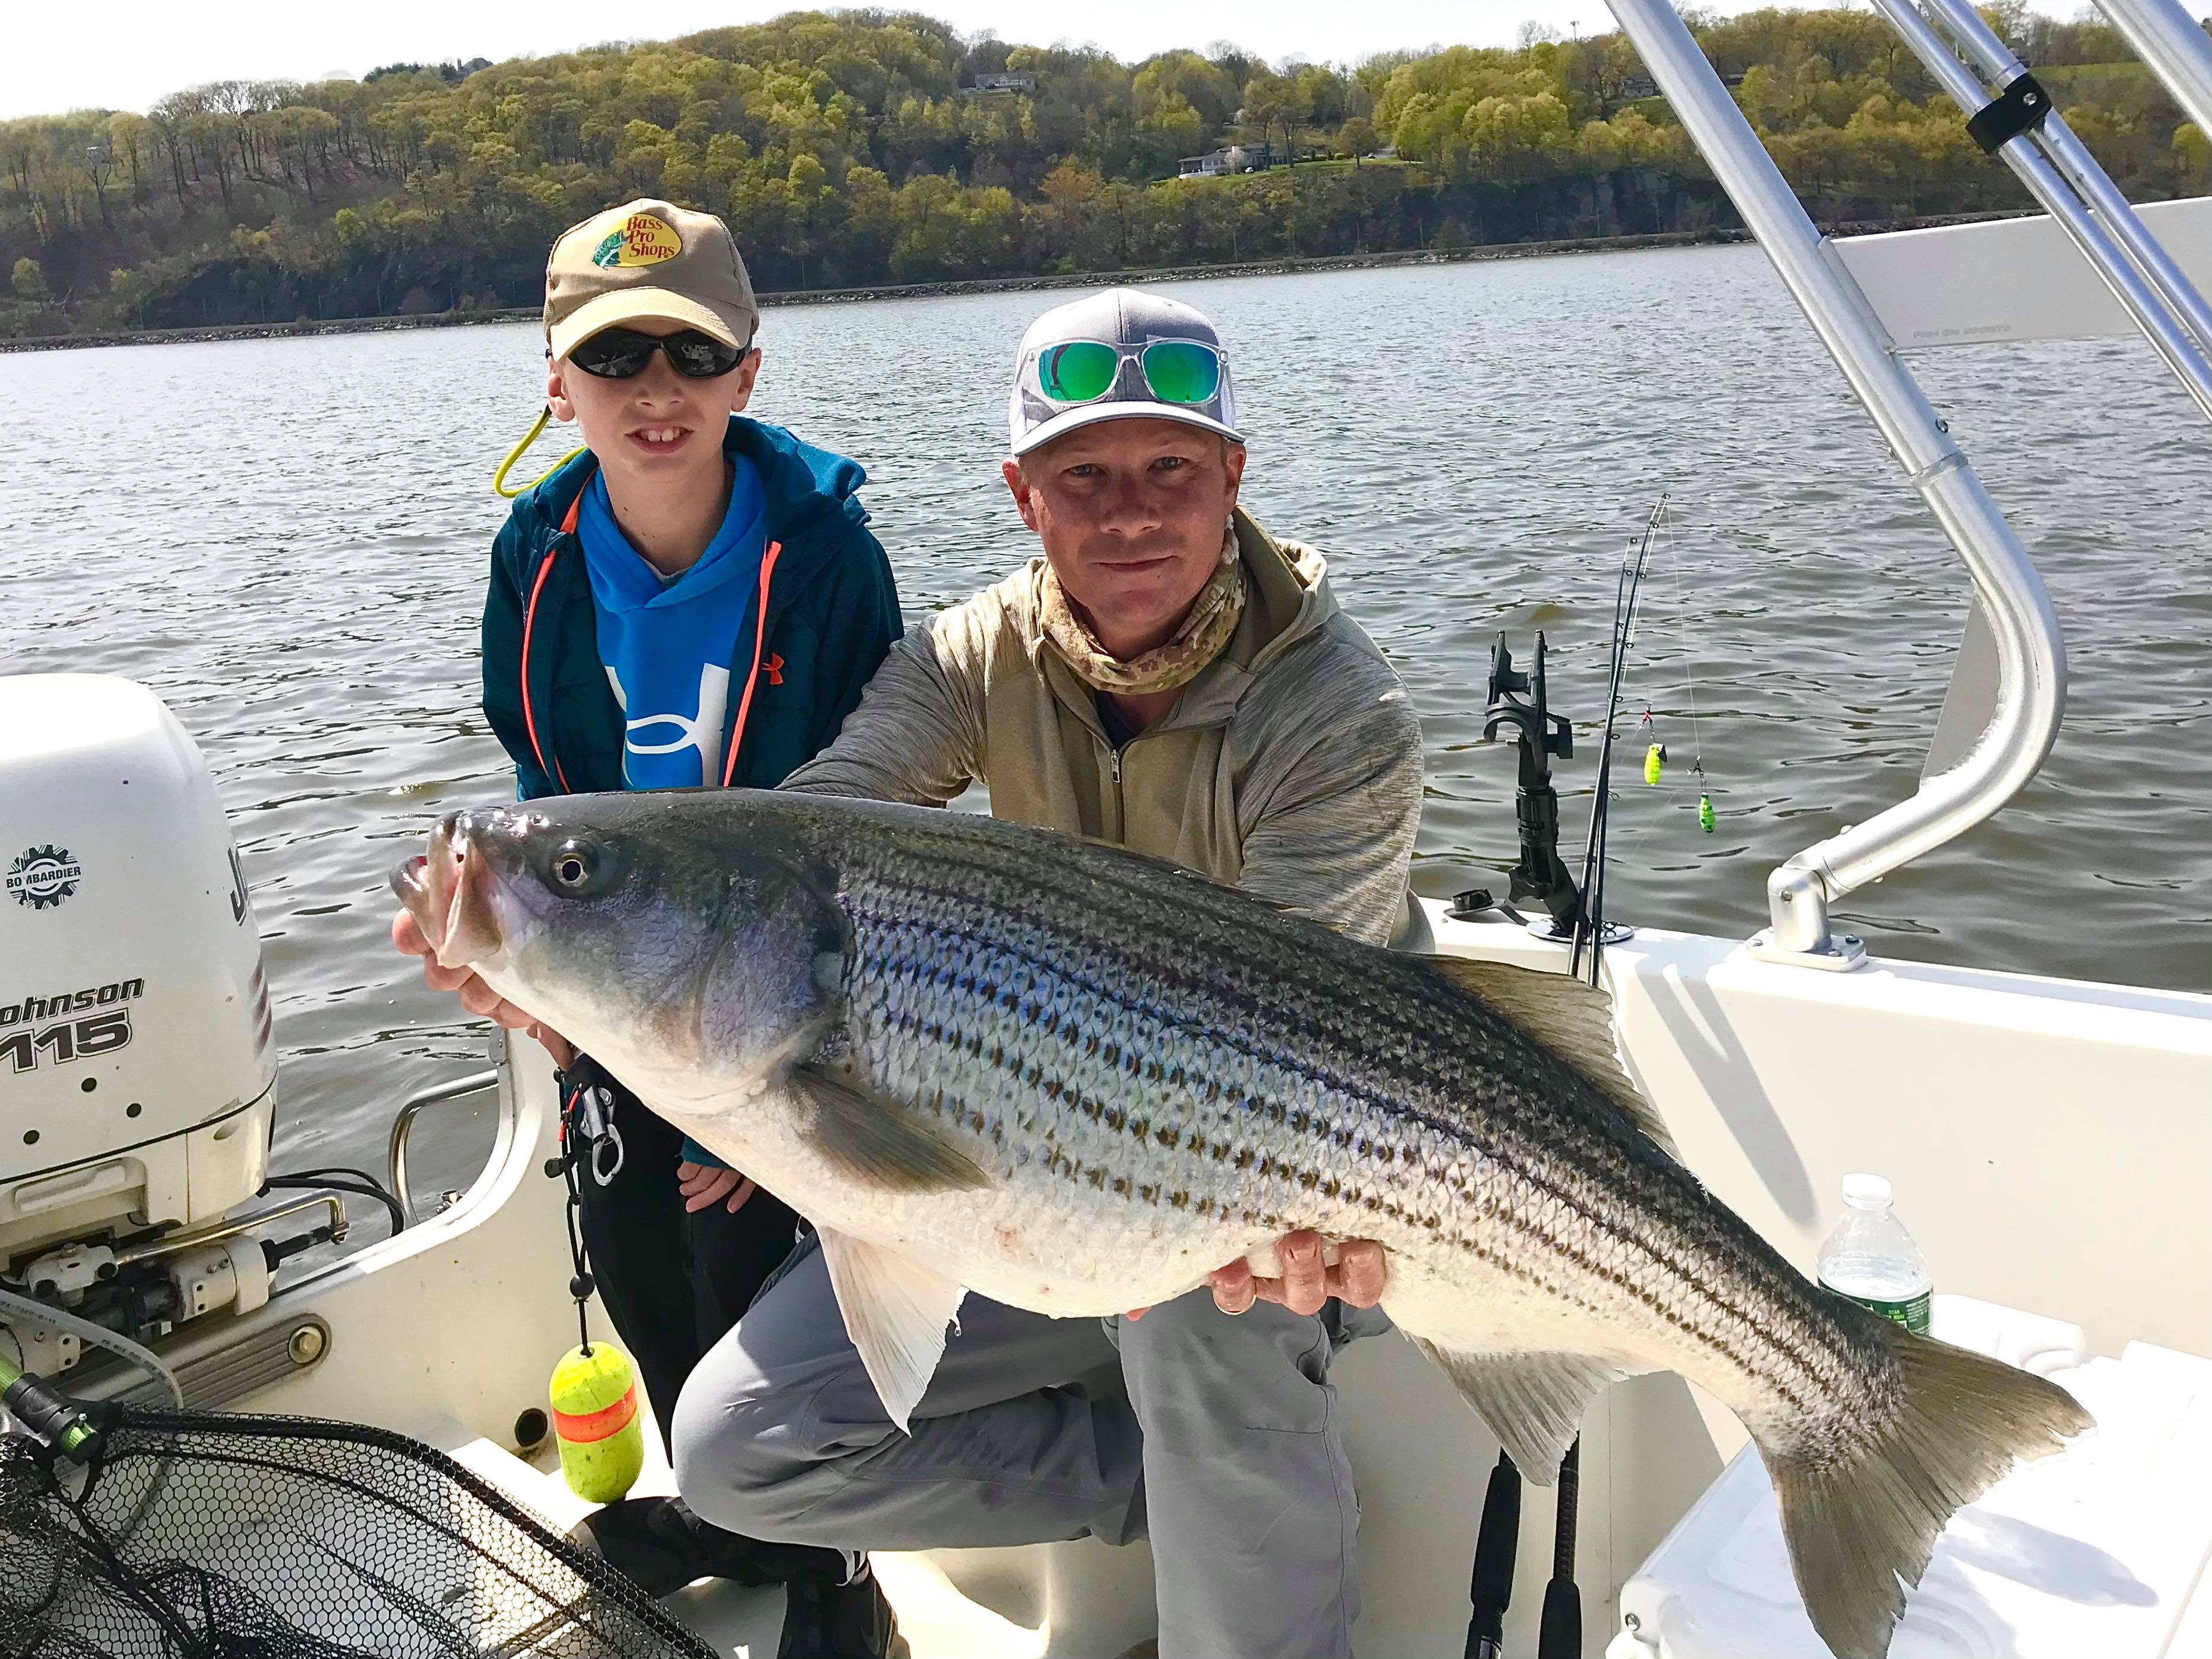 Hudson River striped bass fishing bonanza: Anglers share photos of